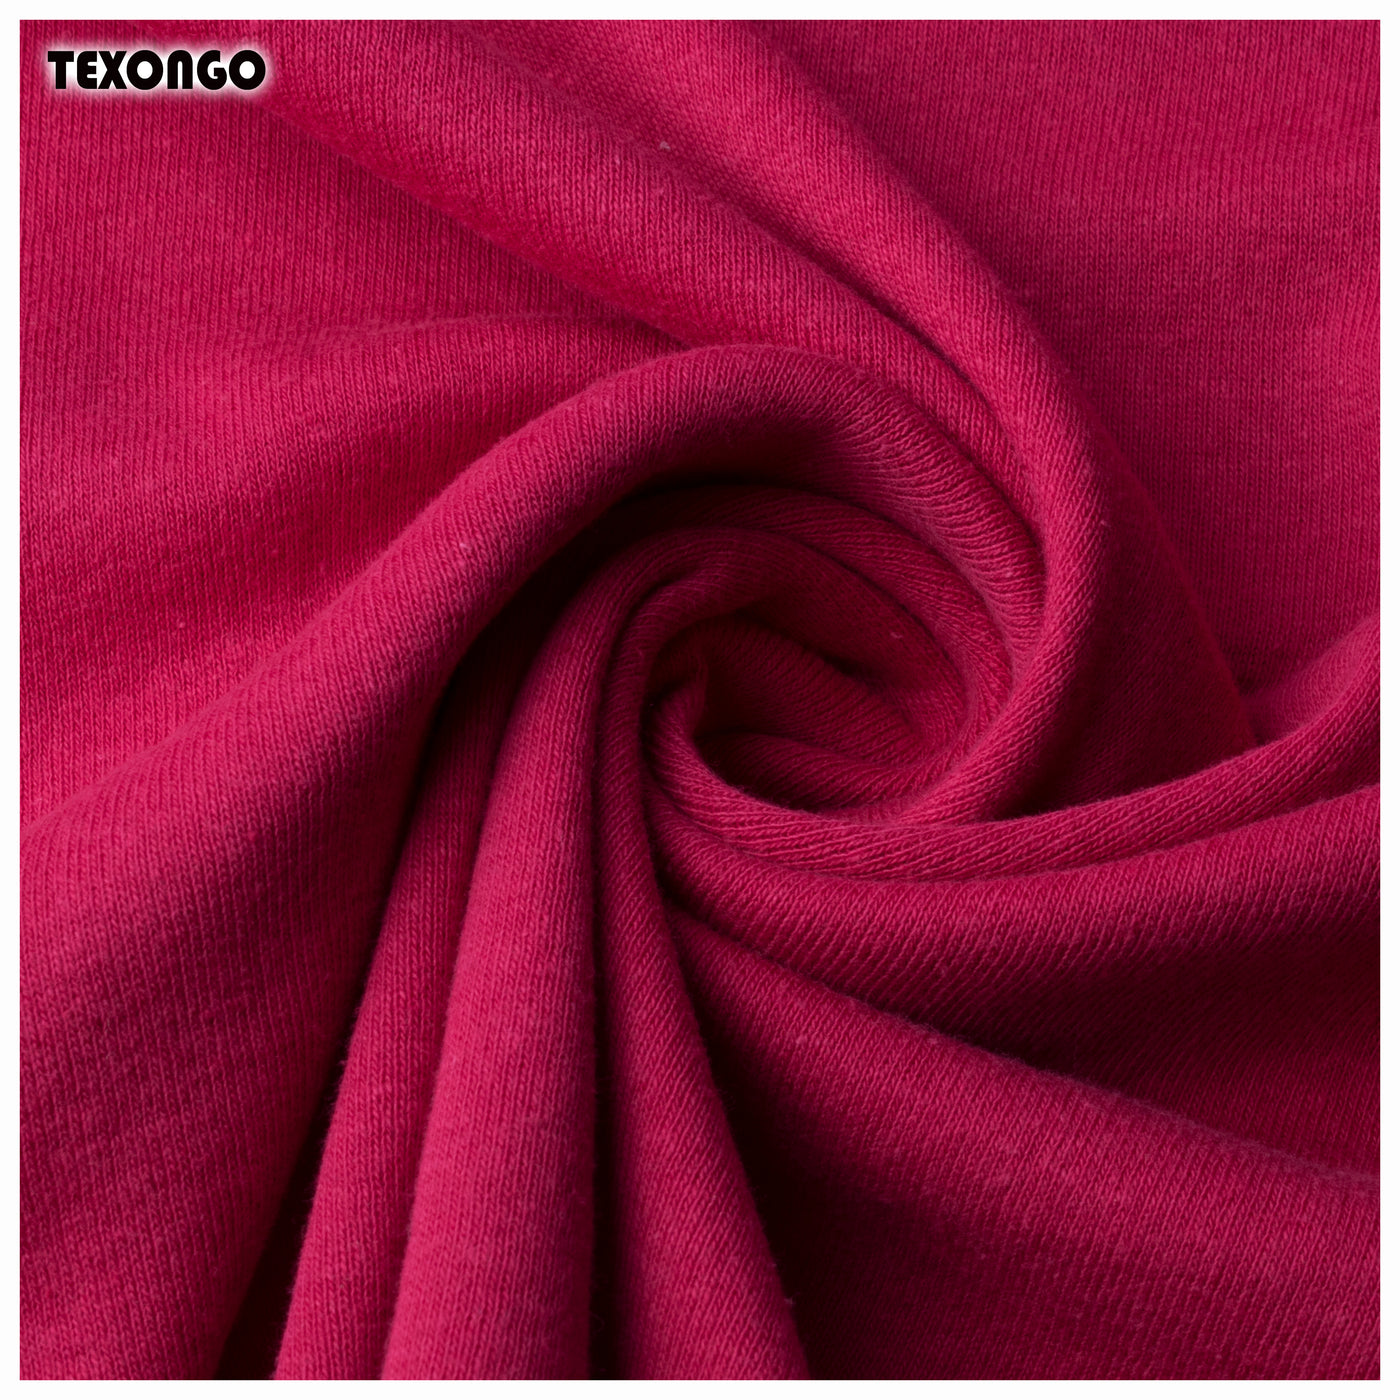 Pink Cotton Rib fabric - Texongo